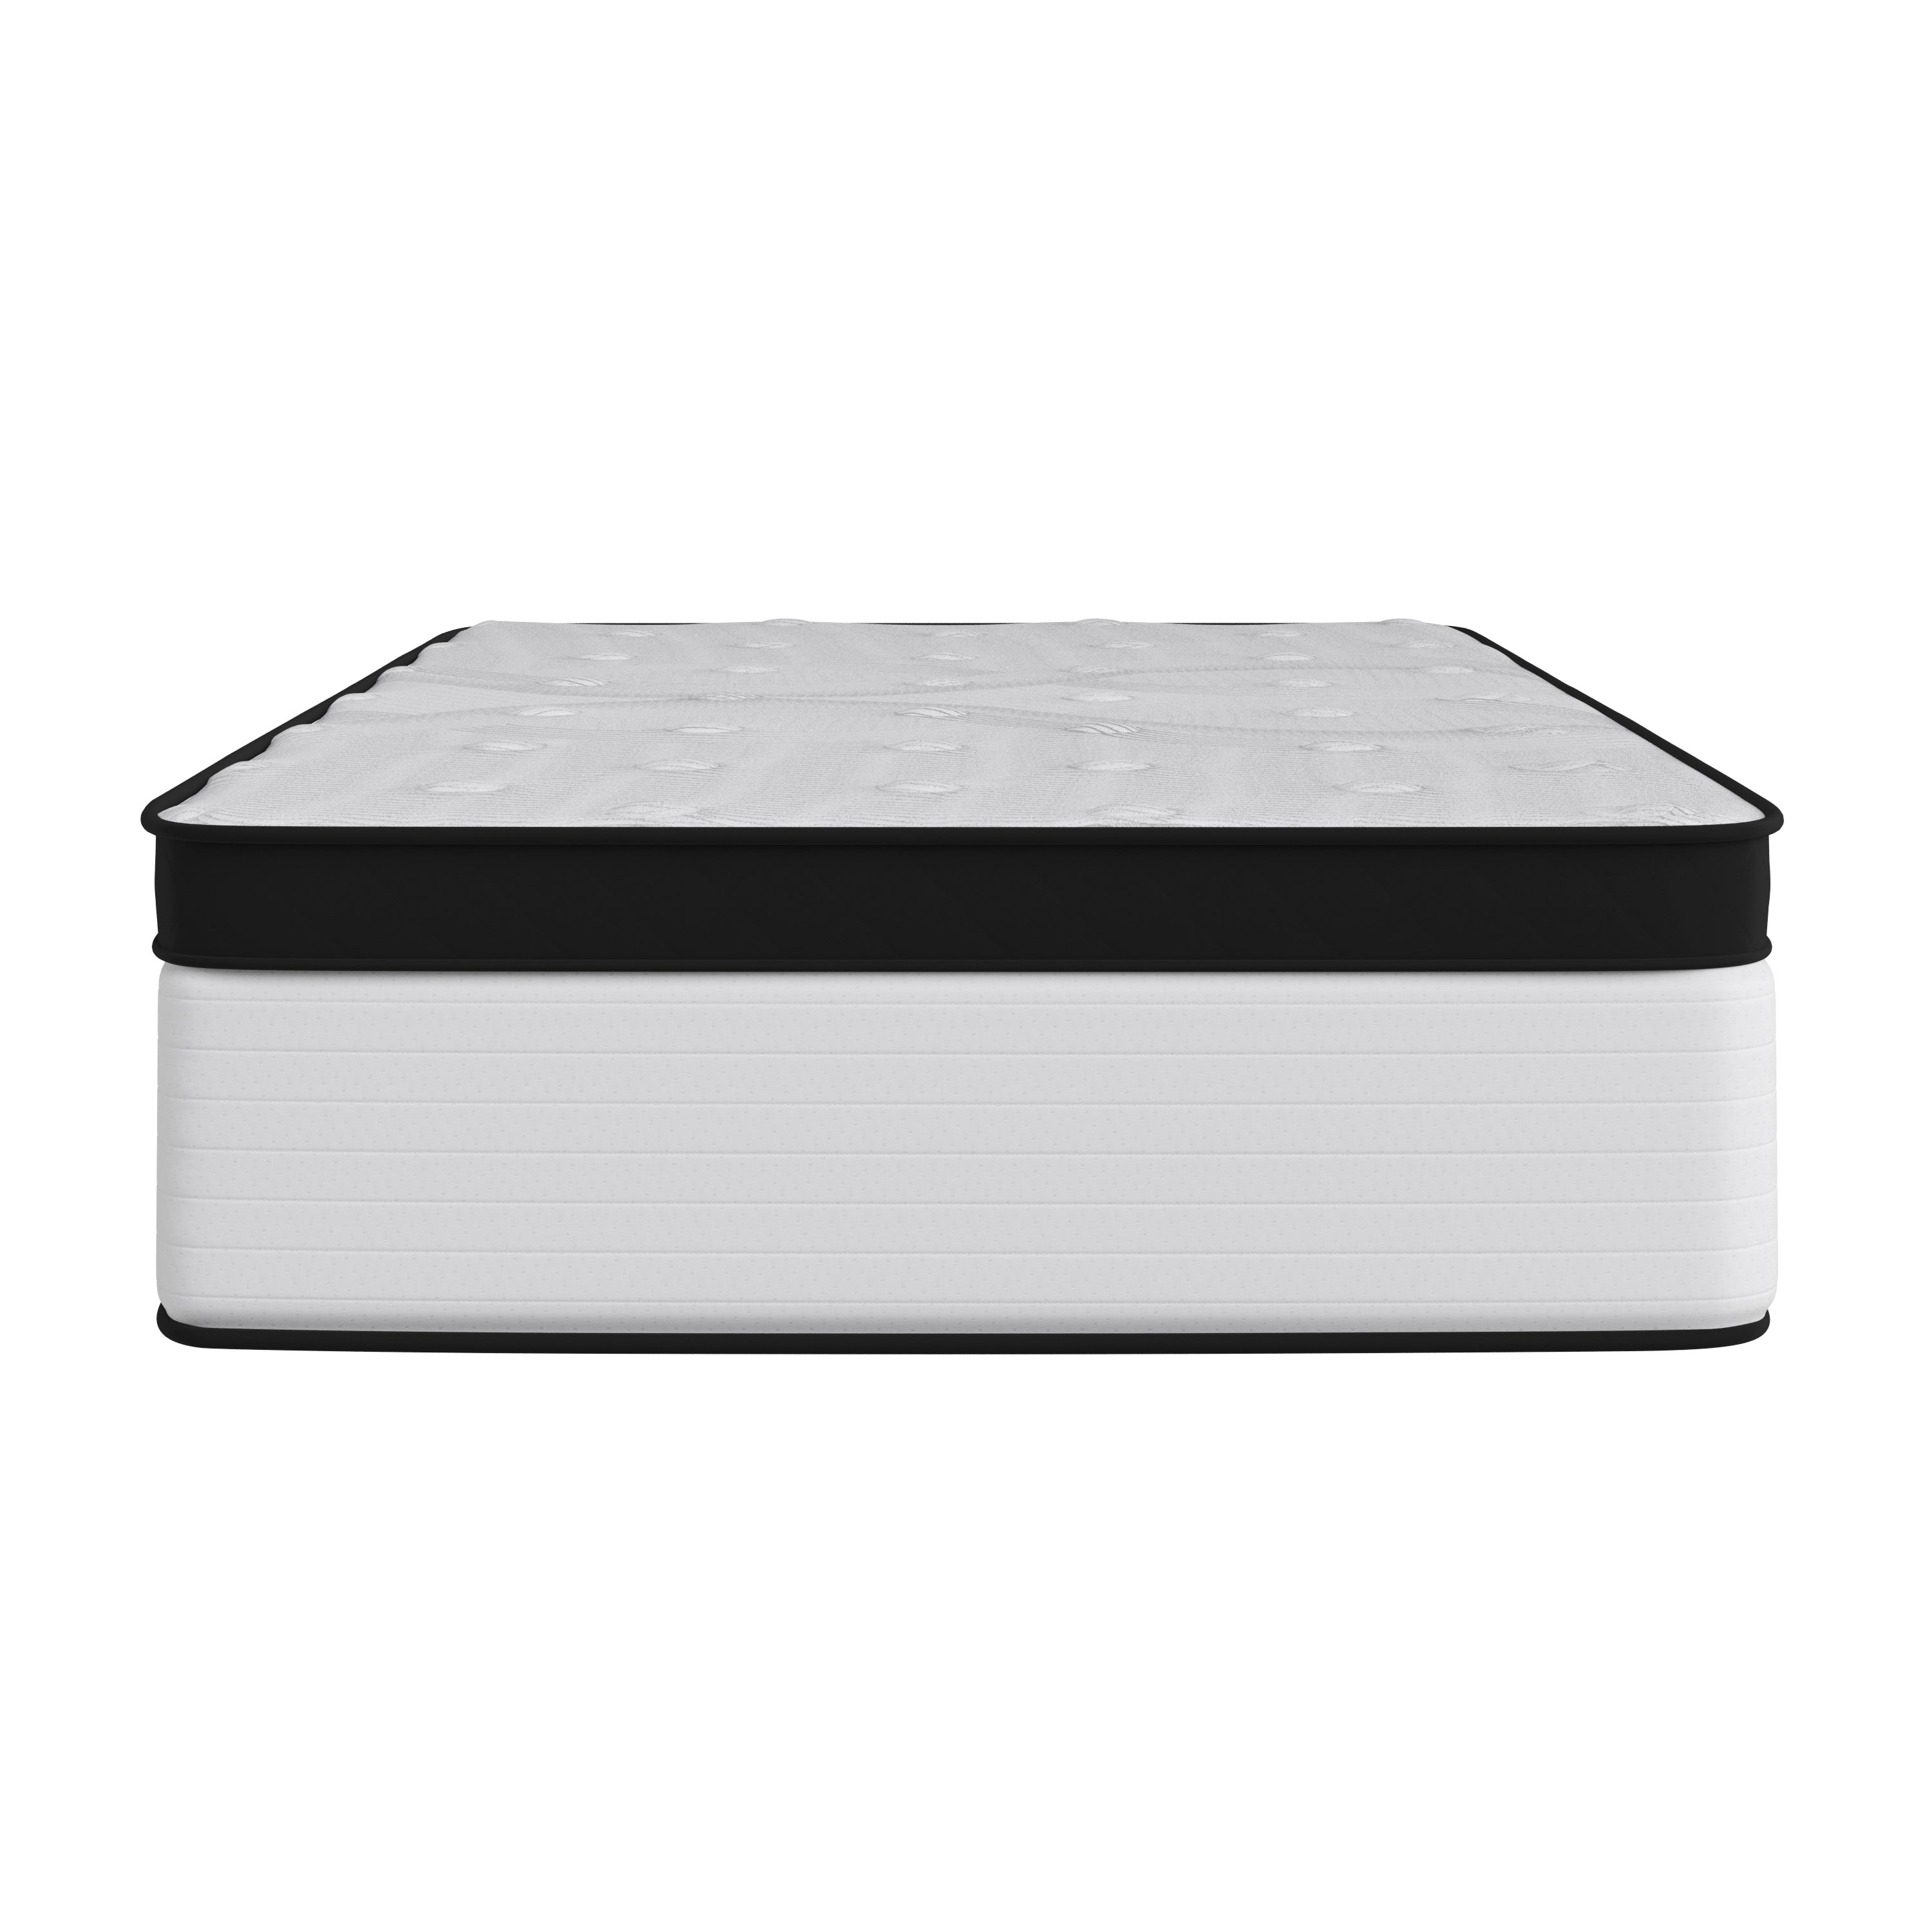 Capri Comfortable Sleep Firm 12 Inch CertiPUR-US Certified Hybrid Pocket Spring Mattress, Extra Firm Feel, Durable Support, Mattress in a Box-Mattress-Flash Furniture-Wall2Wall Furnishings